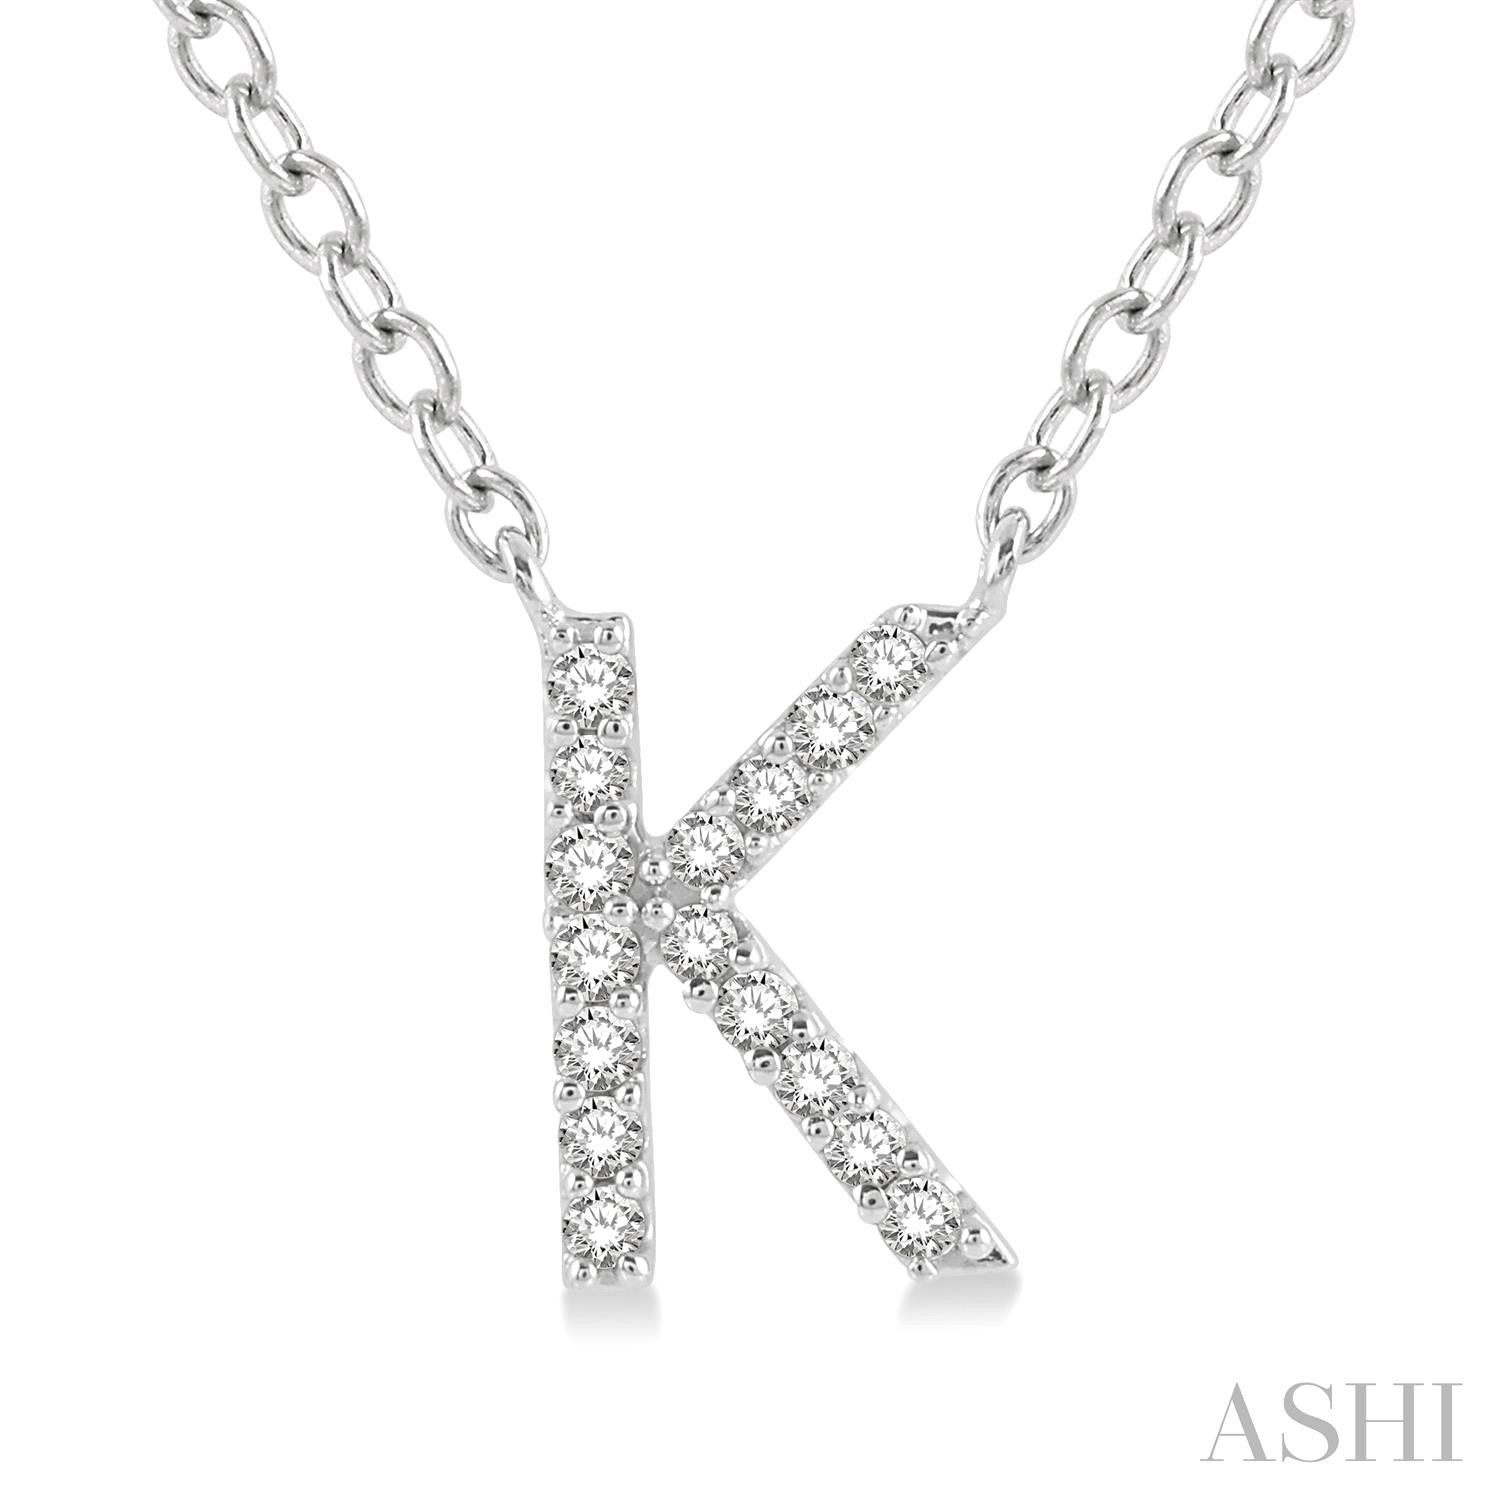 10 Karat White Gold Pendant K' Initial Diamond 0.05CTW Pendant Necklace
18 Inch Chain